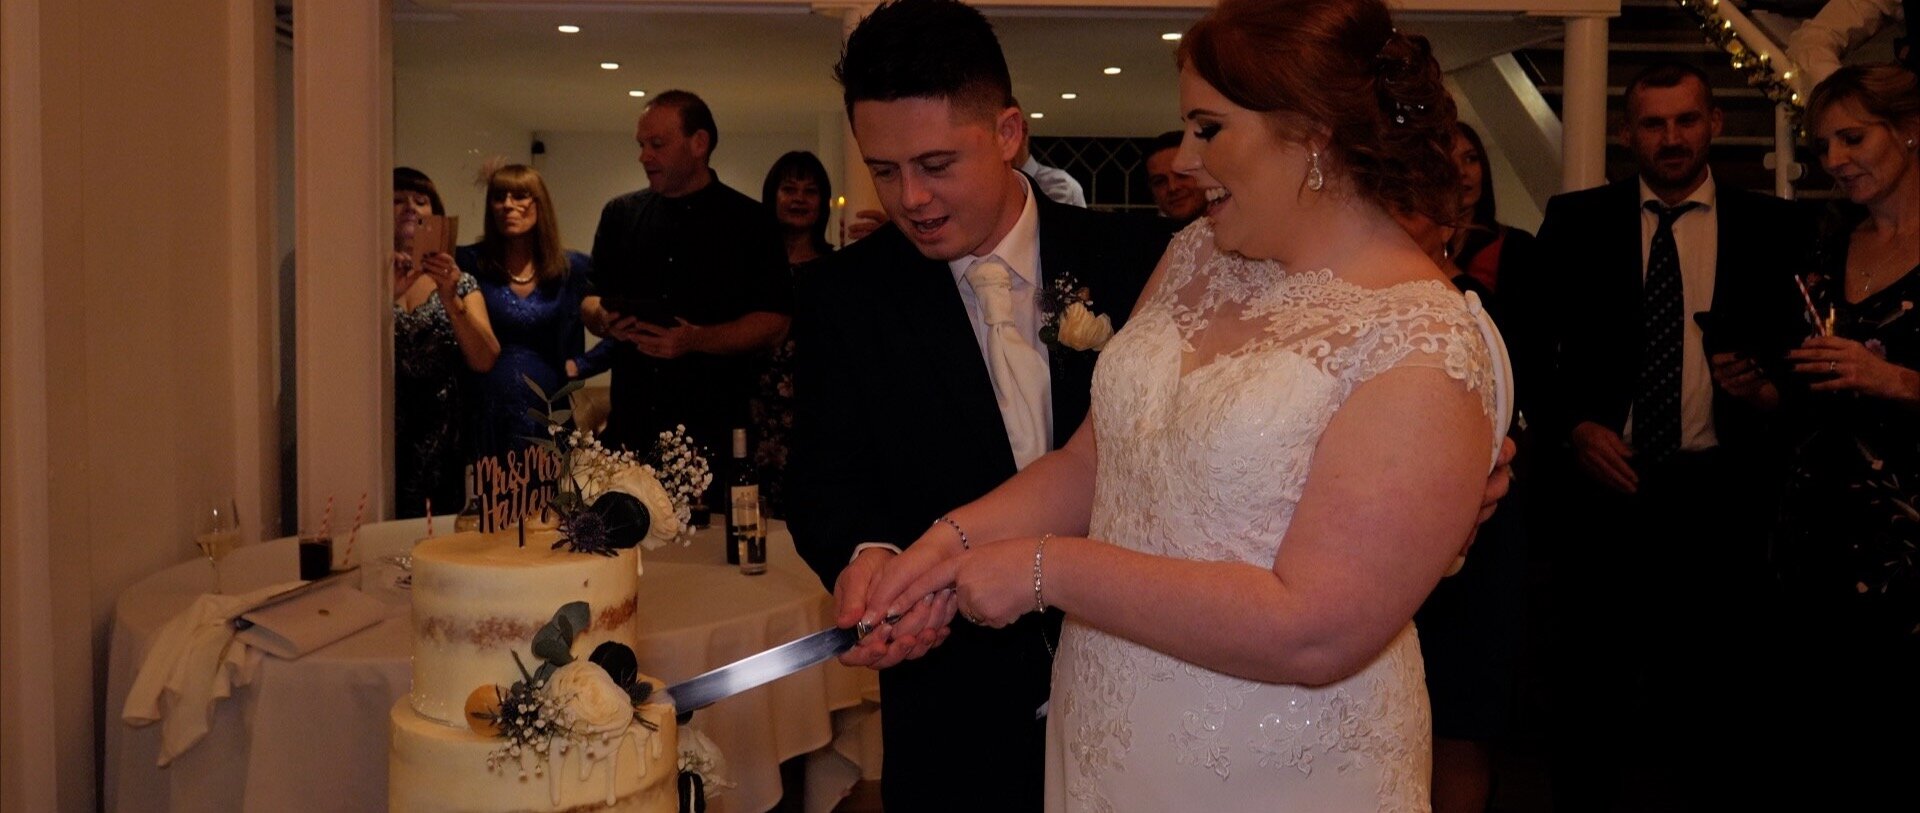 cutting the wedding cake essex videography.jpg